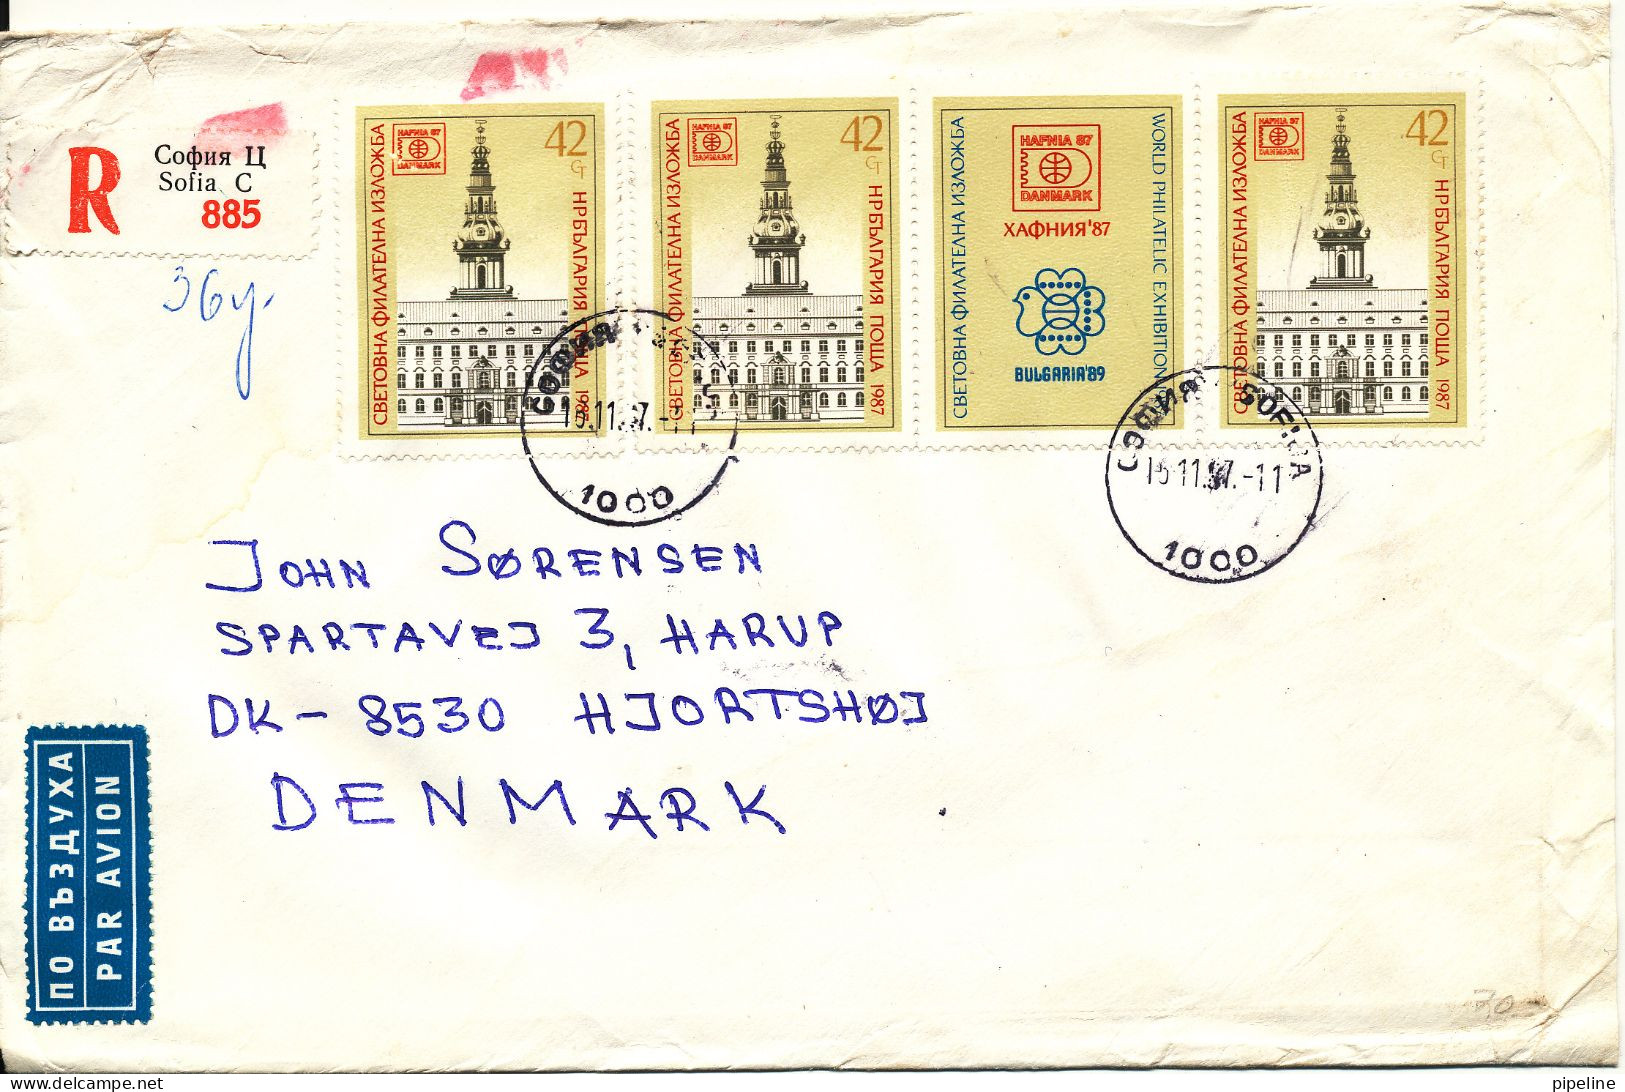 Bulgaria Registered Cover Sent To Denmark Sofia 15-11-1987 With Hafnia 87 In Denmark Stamps (cover Damaged On Backside) - Briefe U. Dokumente